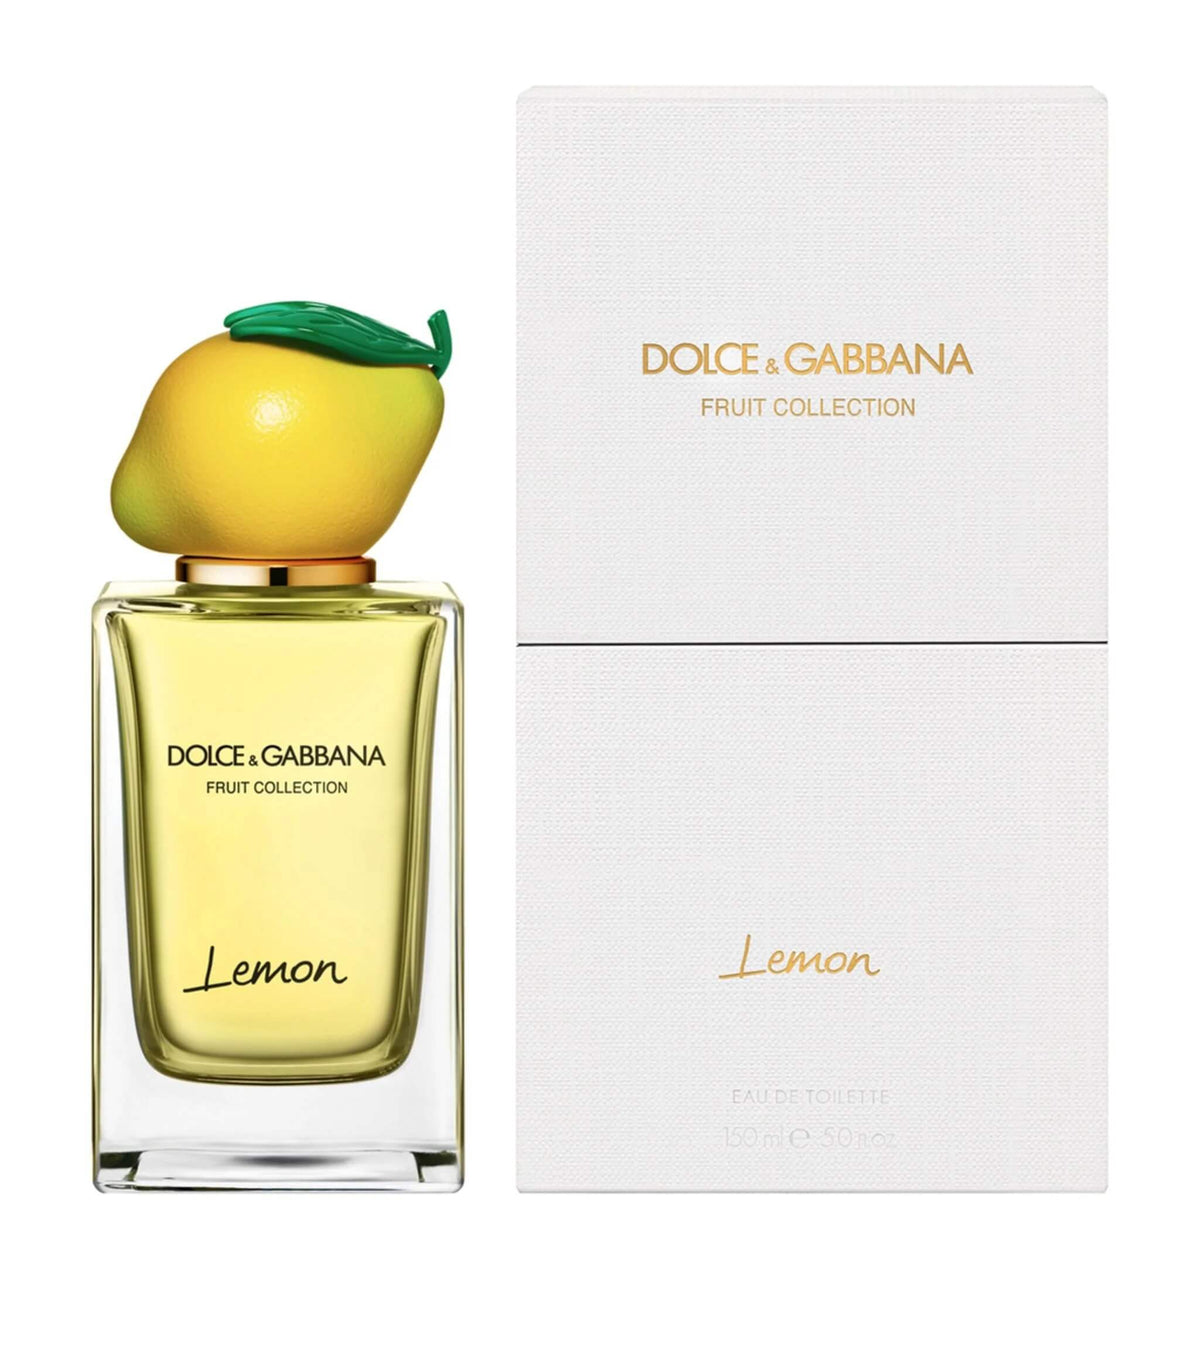 Dolce & Gabbana Fruit Collection - Lemon 150ml